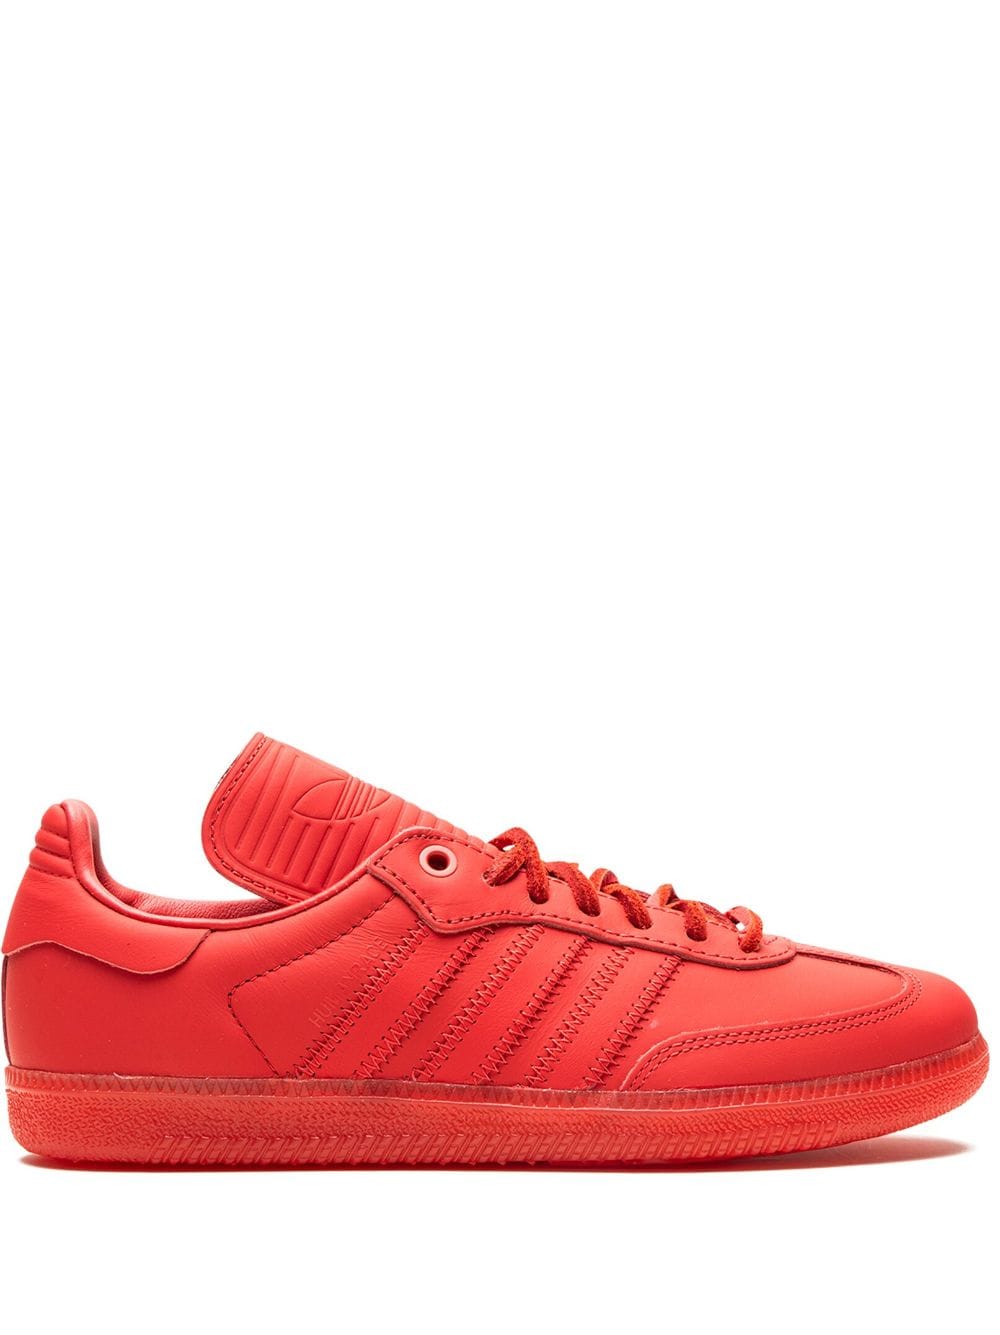 adidas x Pharrell Samba Humanrace "Red" sneakers von adidas